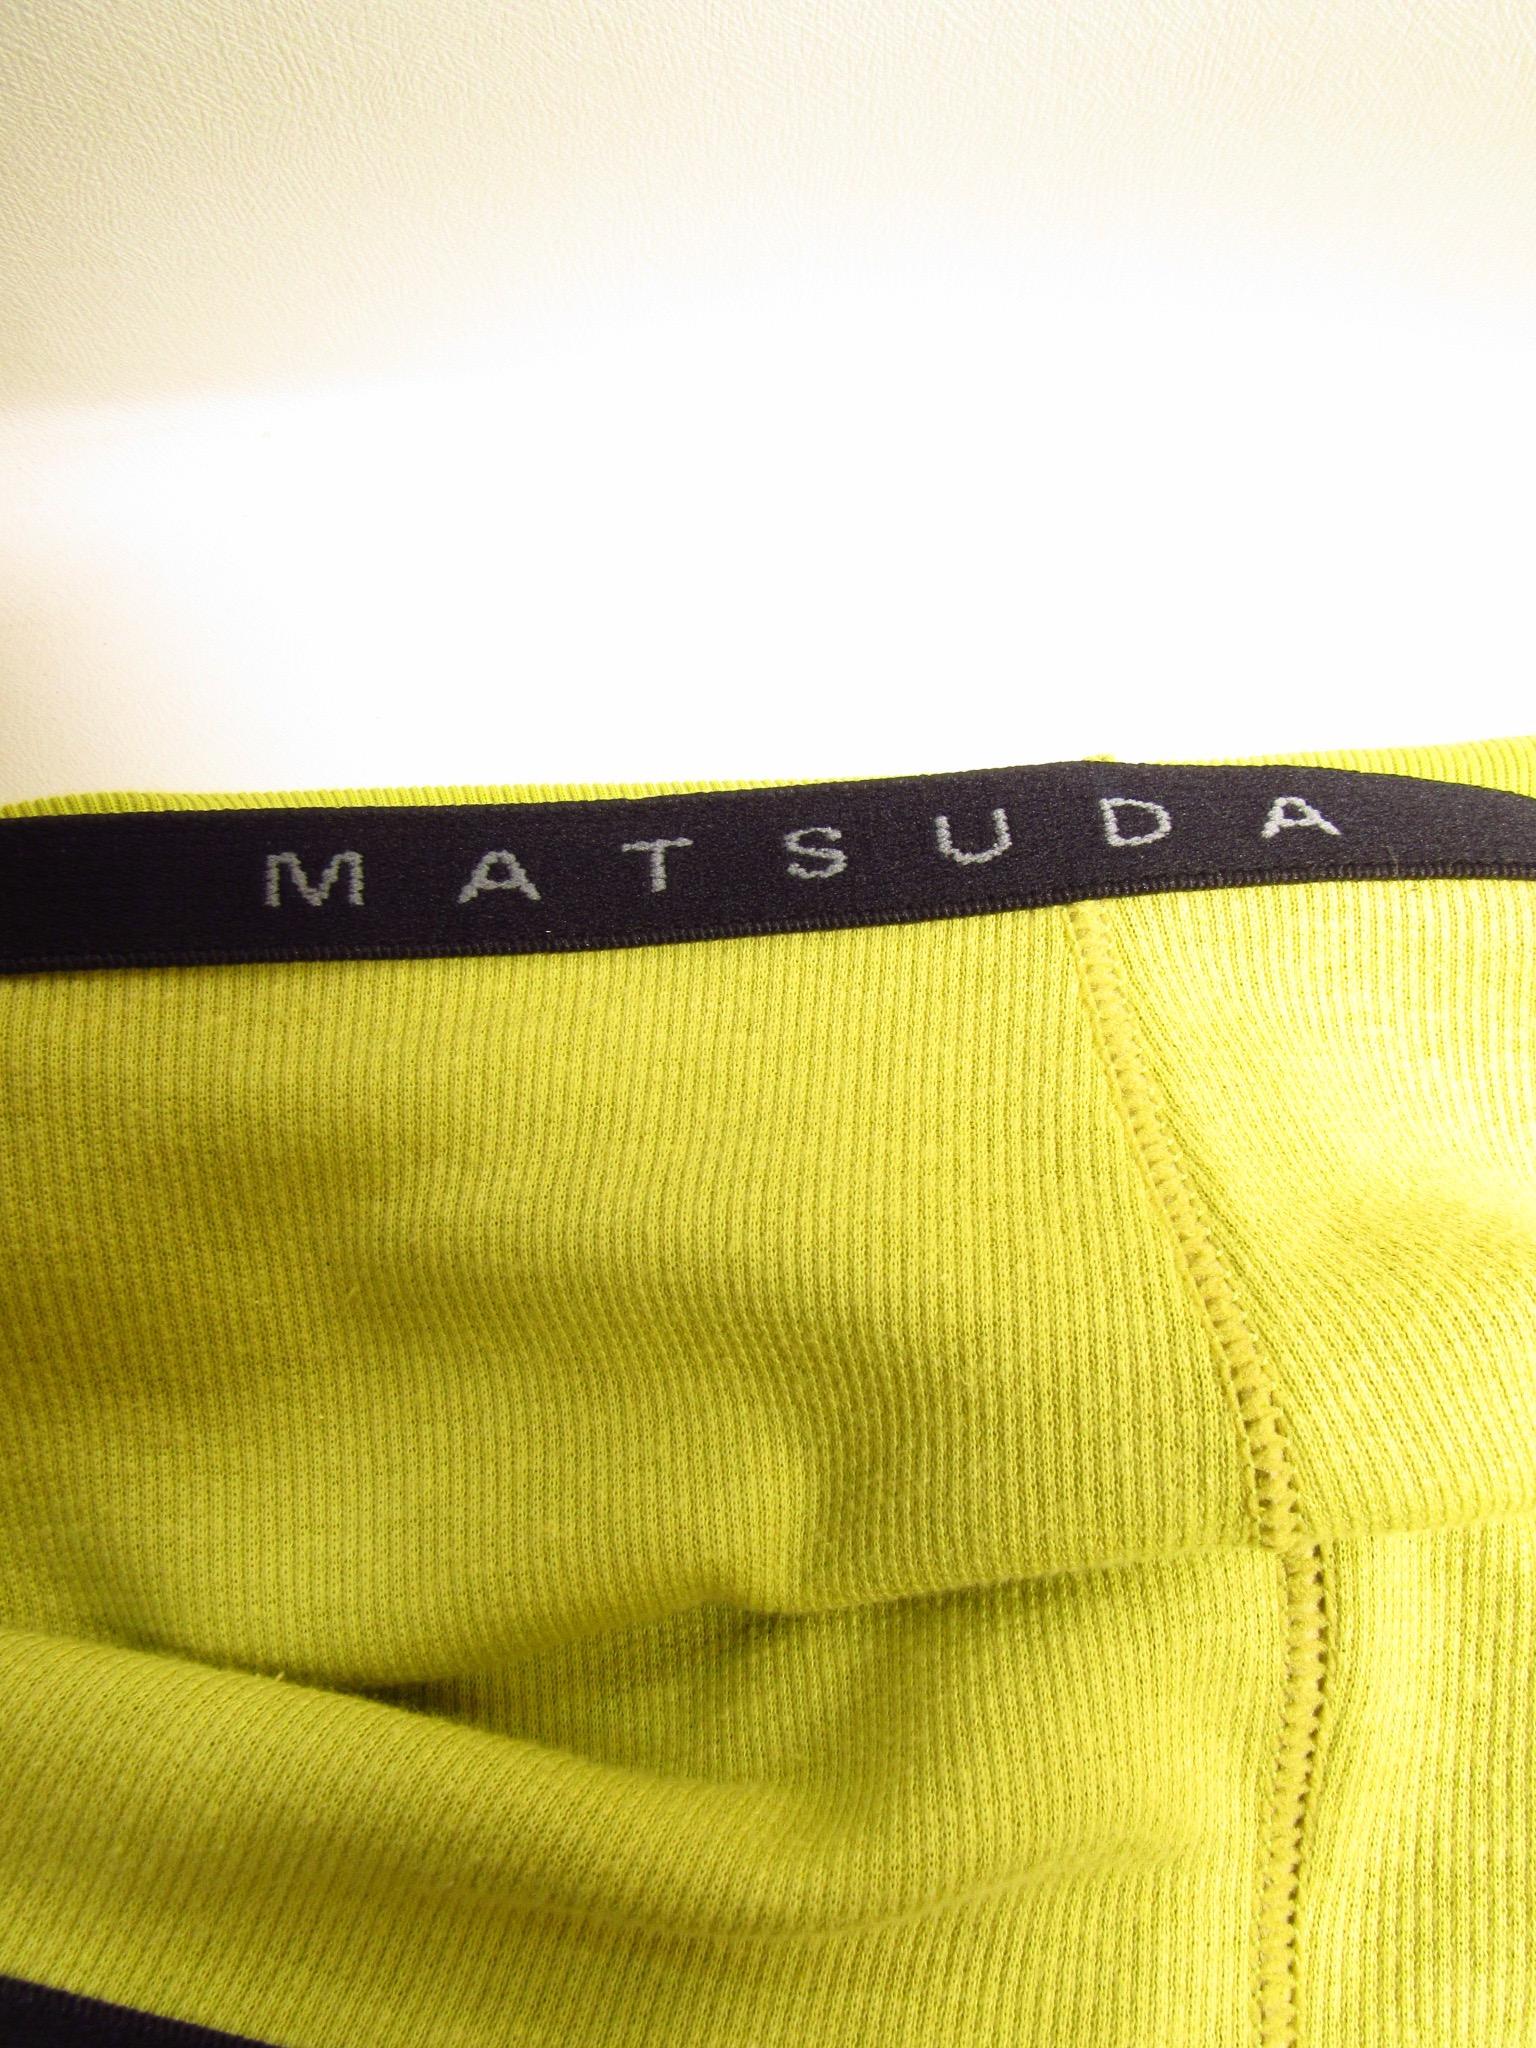  Matsuda vintage Chartreuse Stretch Pant For Sale 1